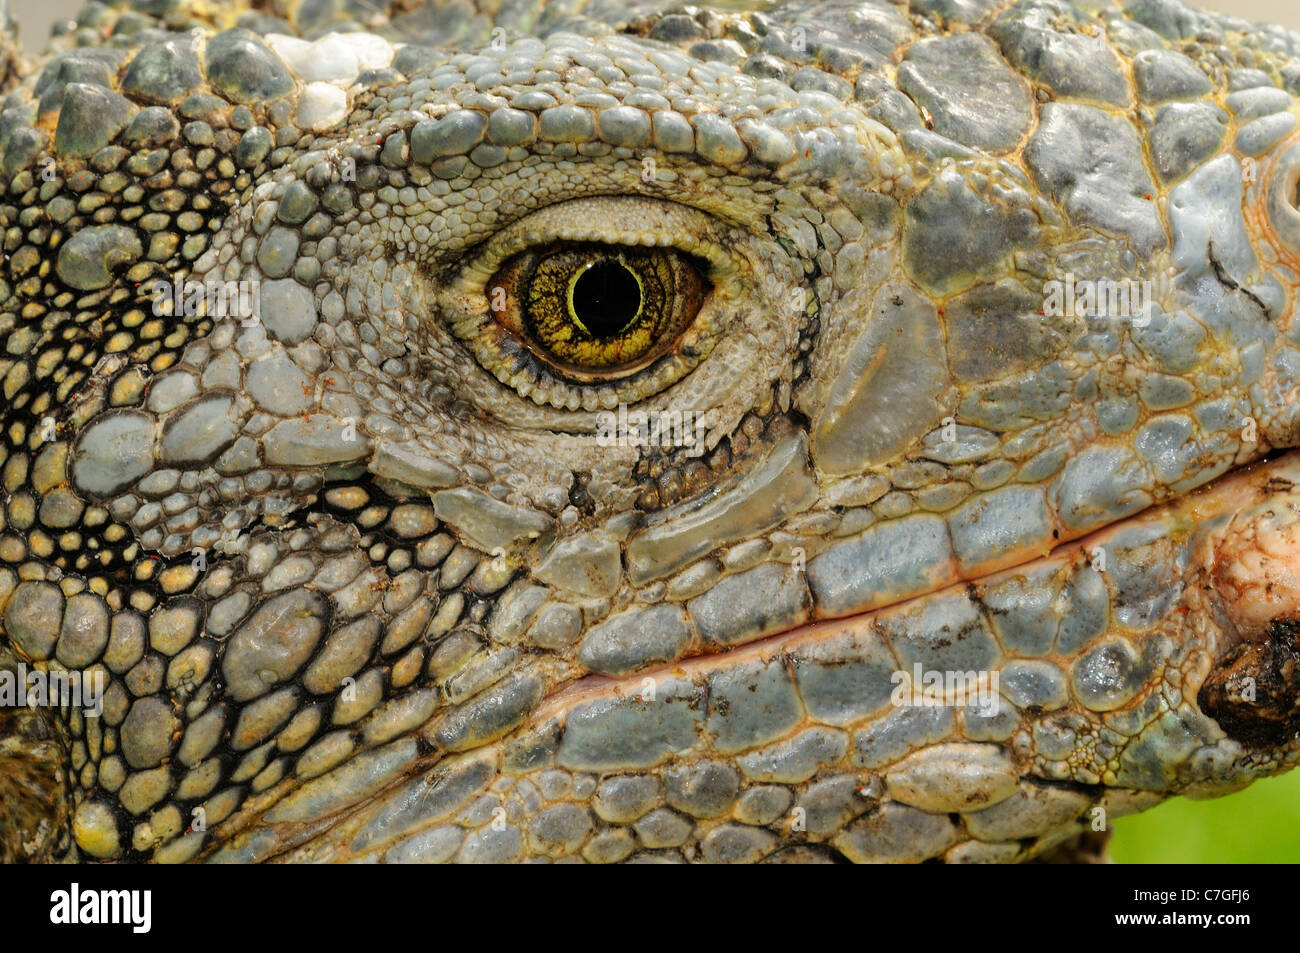 Iguana (Iguana iguana) close up of face and eye, Parque Bolivar, Guayaquil, Ecuador Stock Photo